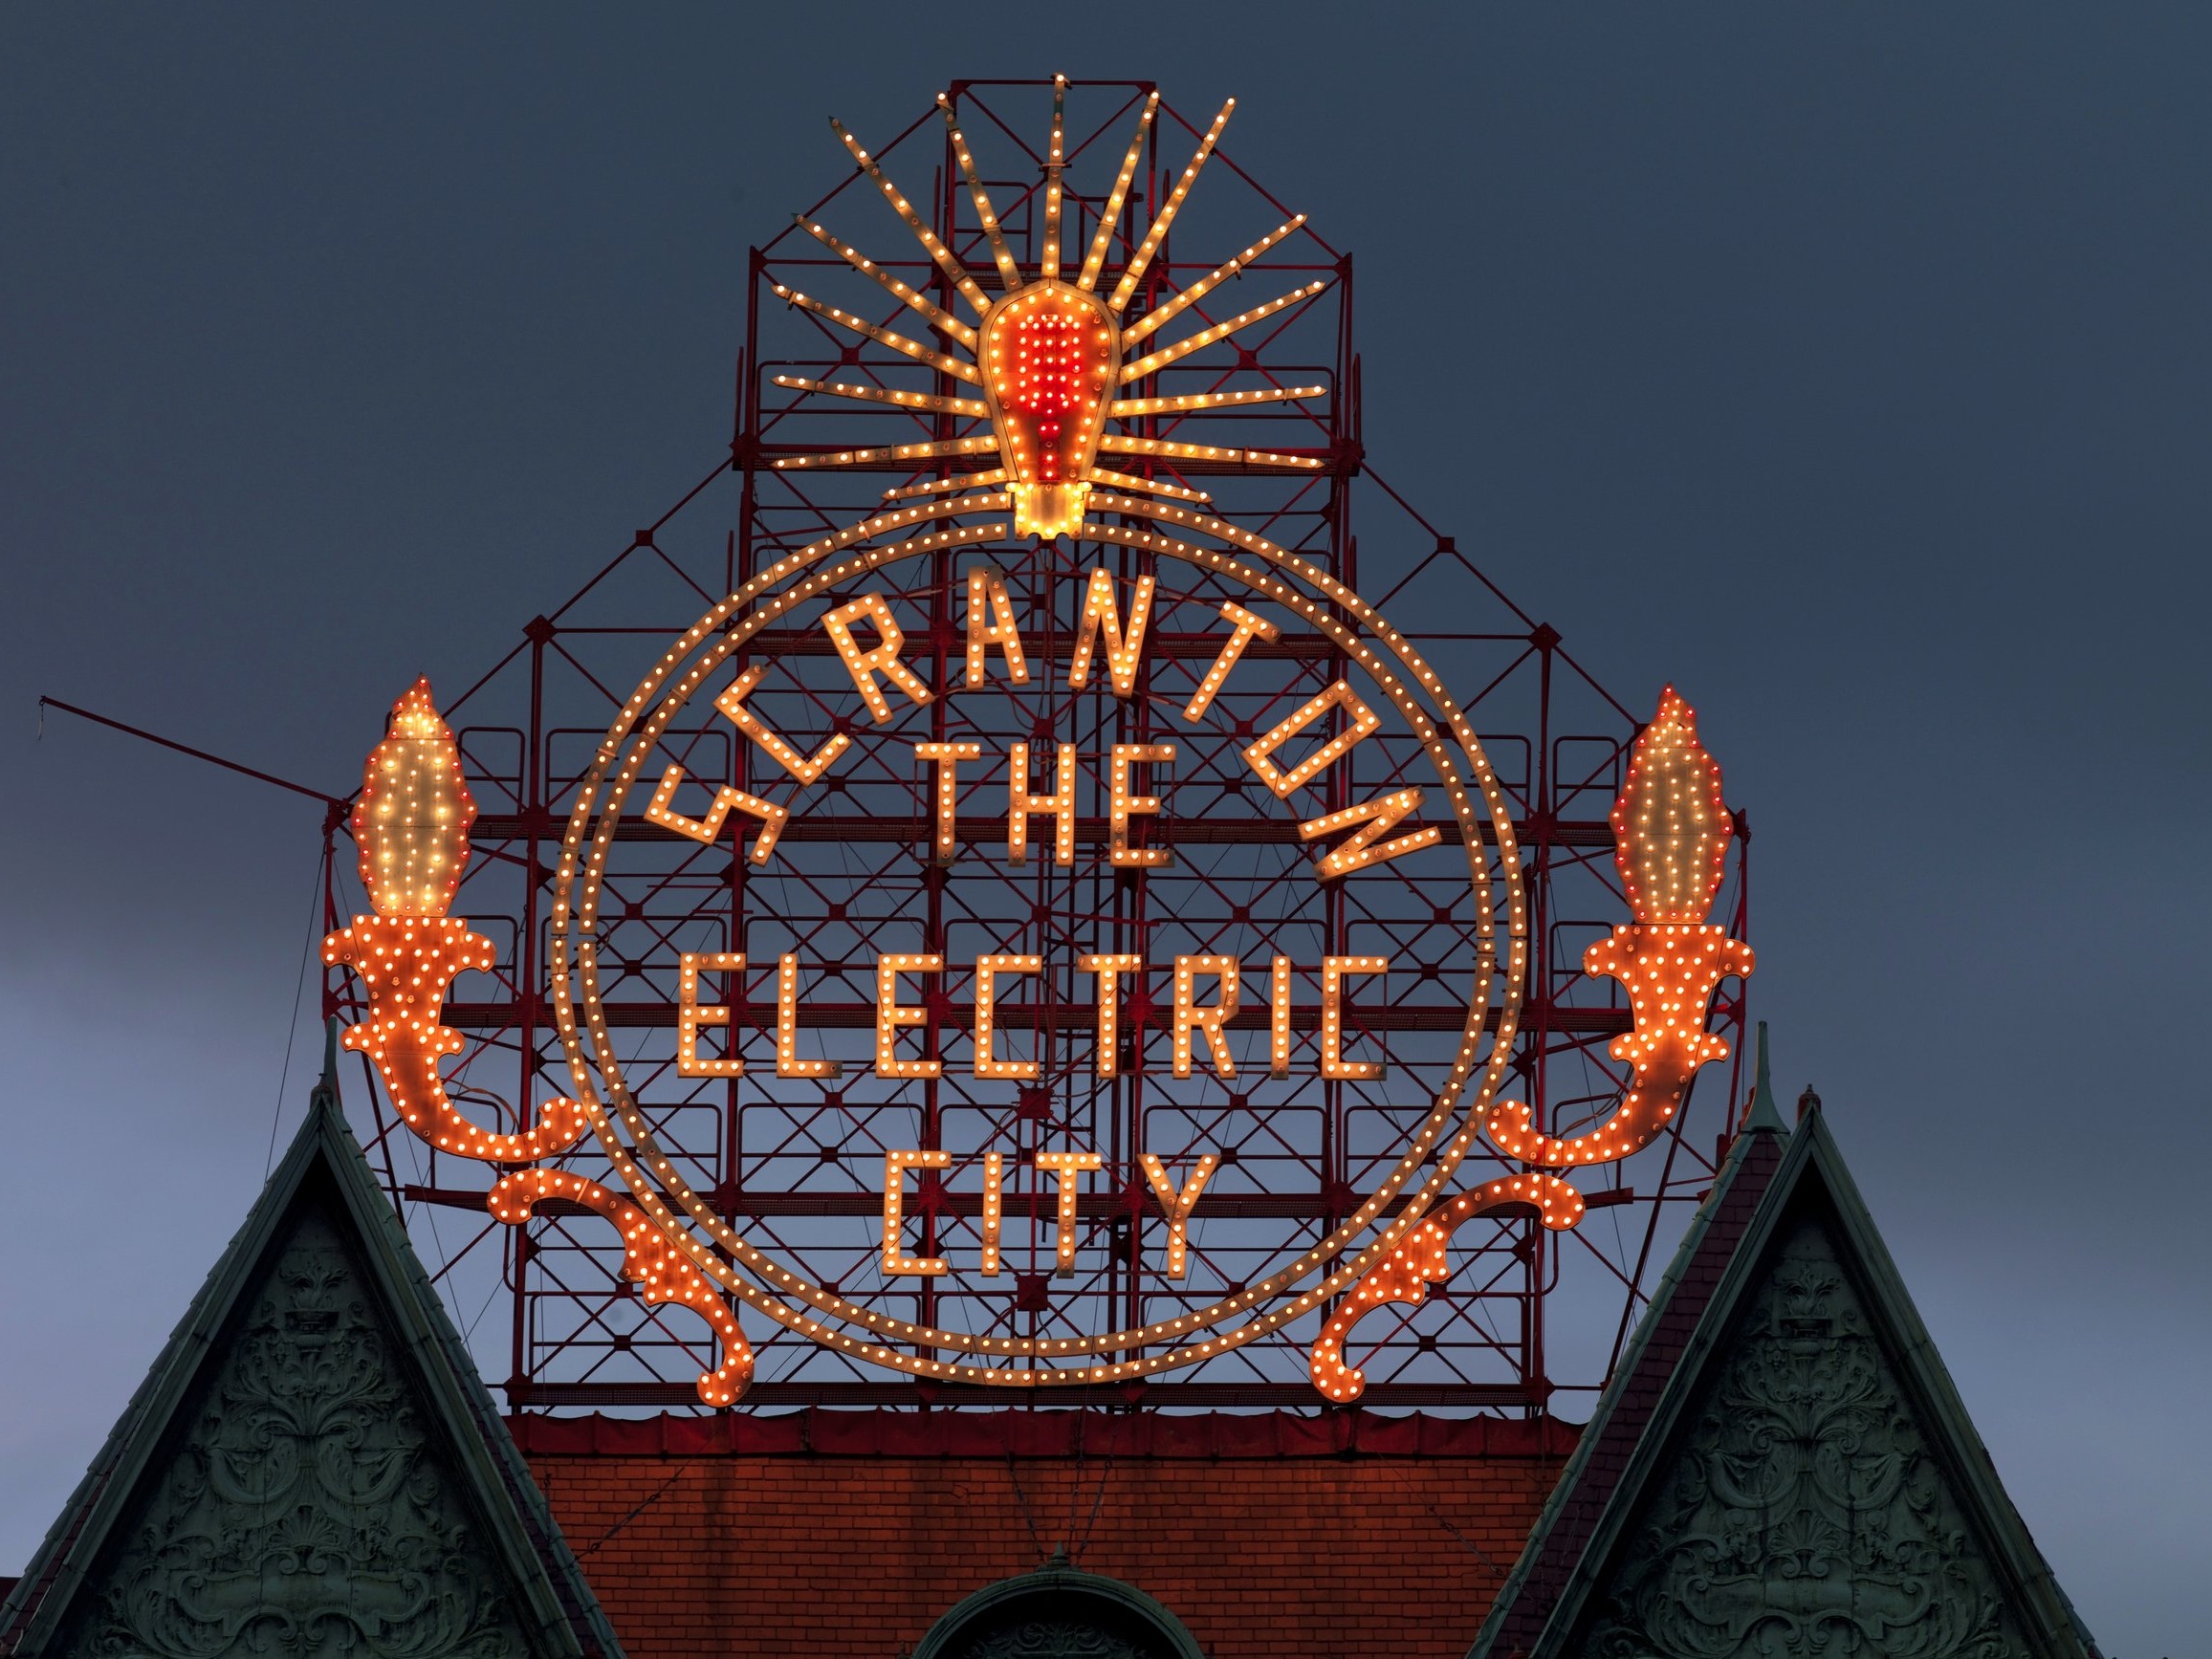 Scranton - The Electric City - Photo Credit: Carol M. Highsmith [Public domain]